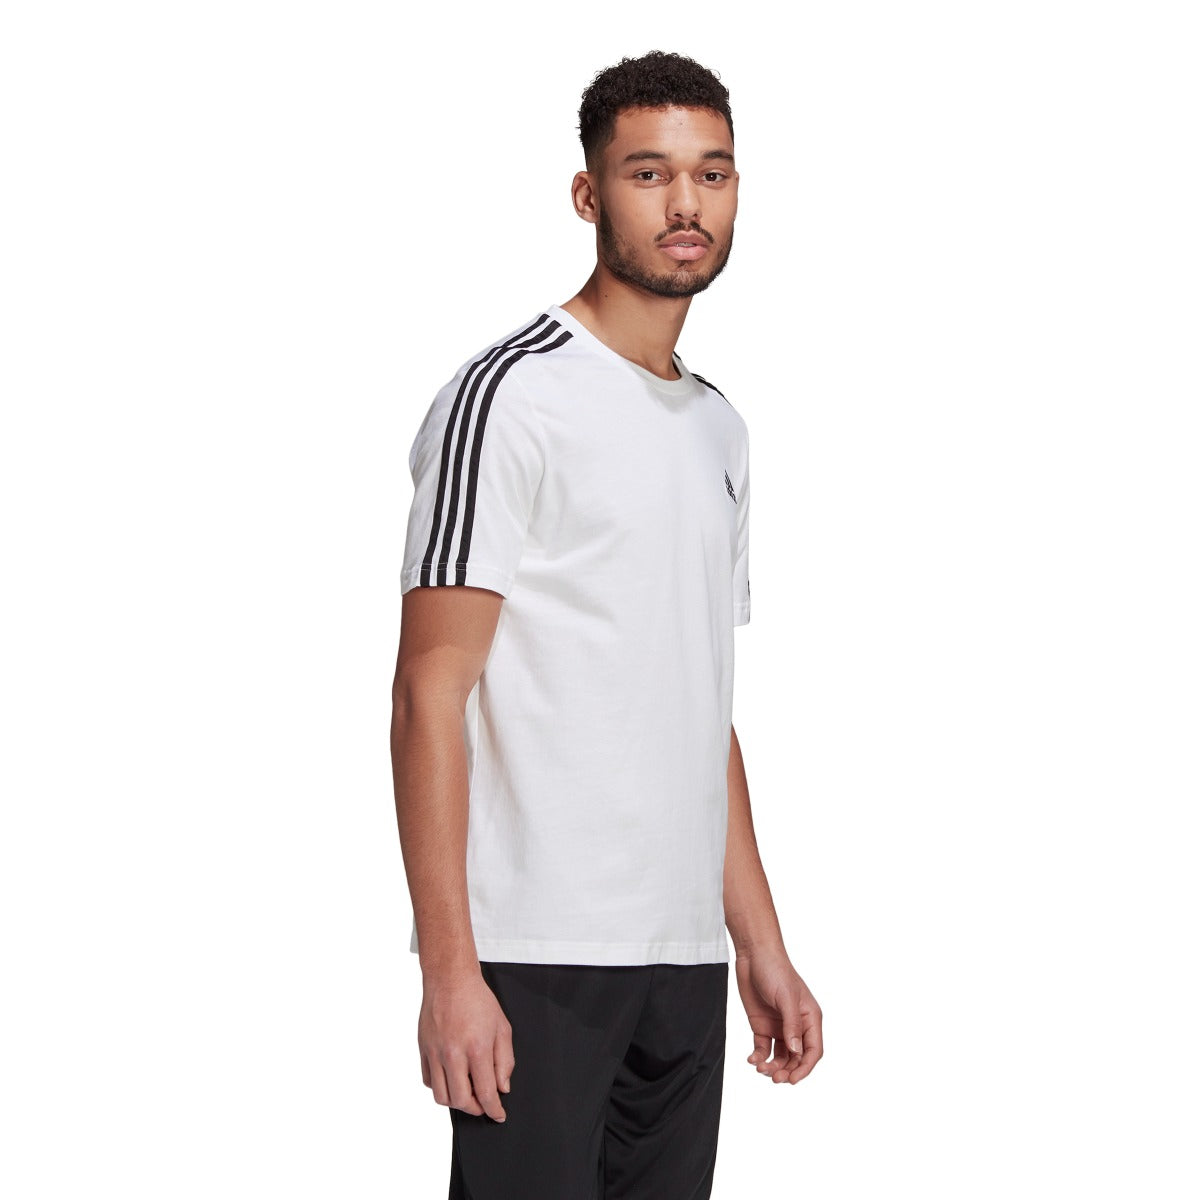 Adidas Ess 3S T-Shirt White